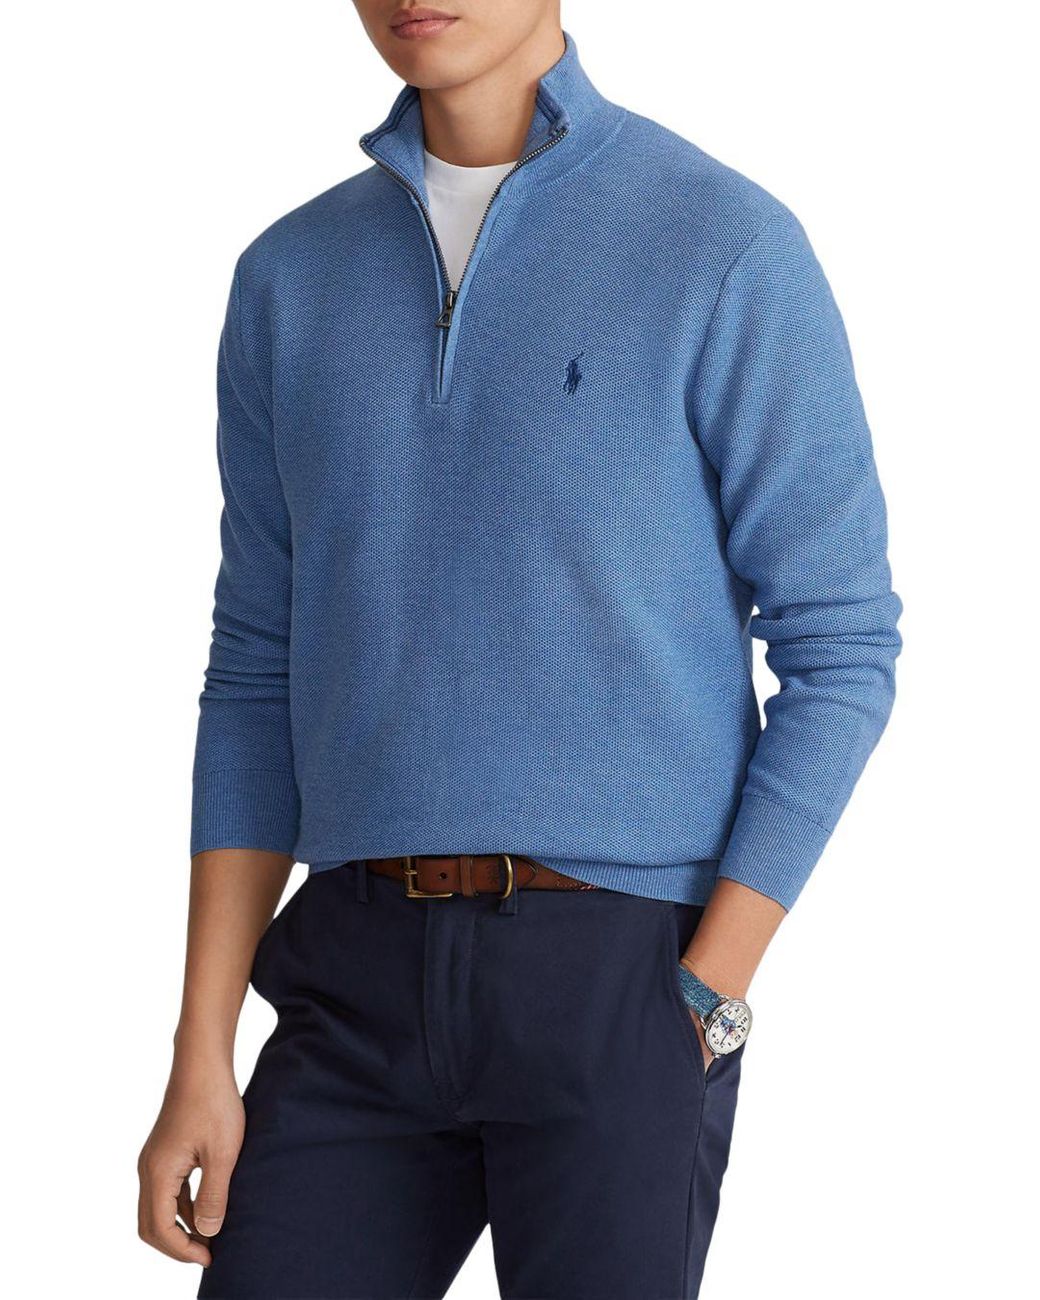 Polo Ralph Lauren Regular Fit Cotton Mesh Quarter Zip Pullover in Blue for Men - Lyst